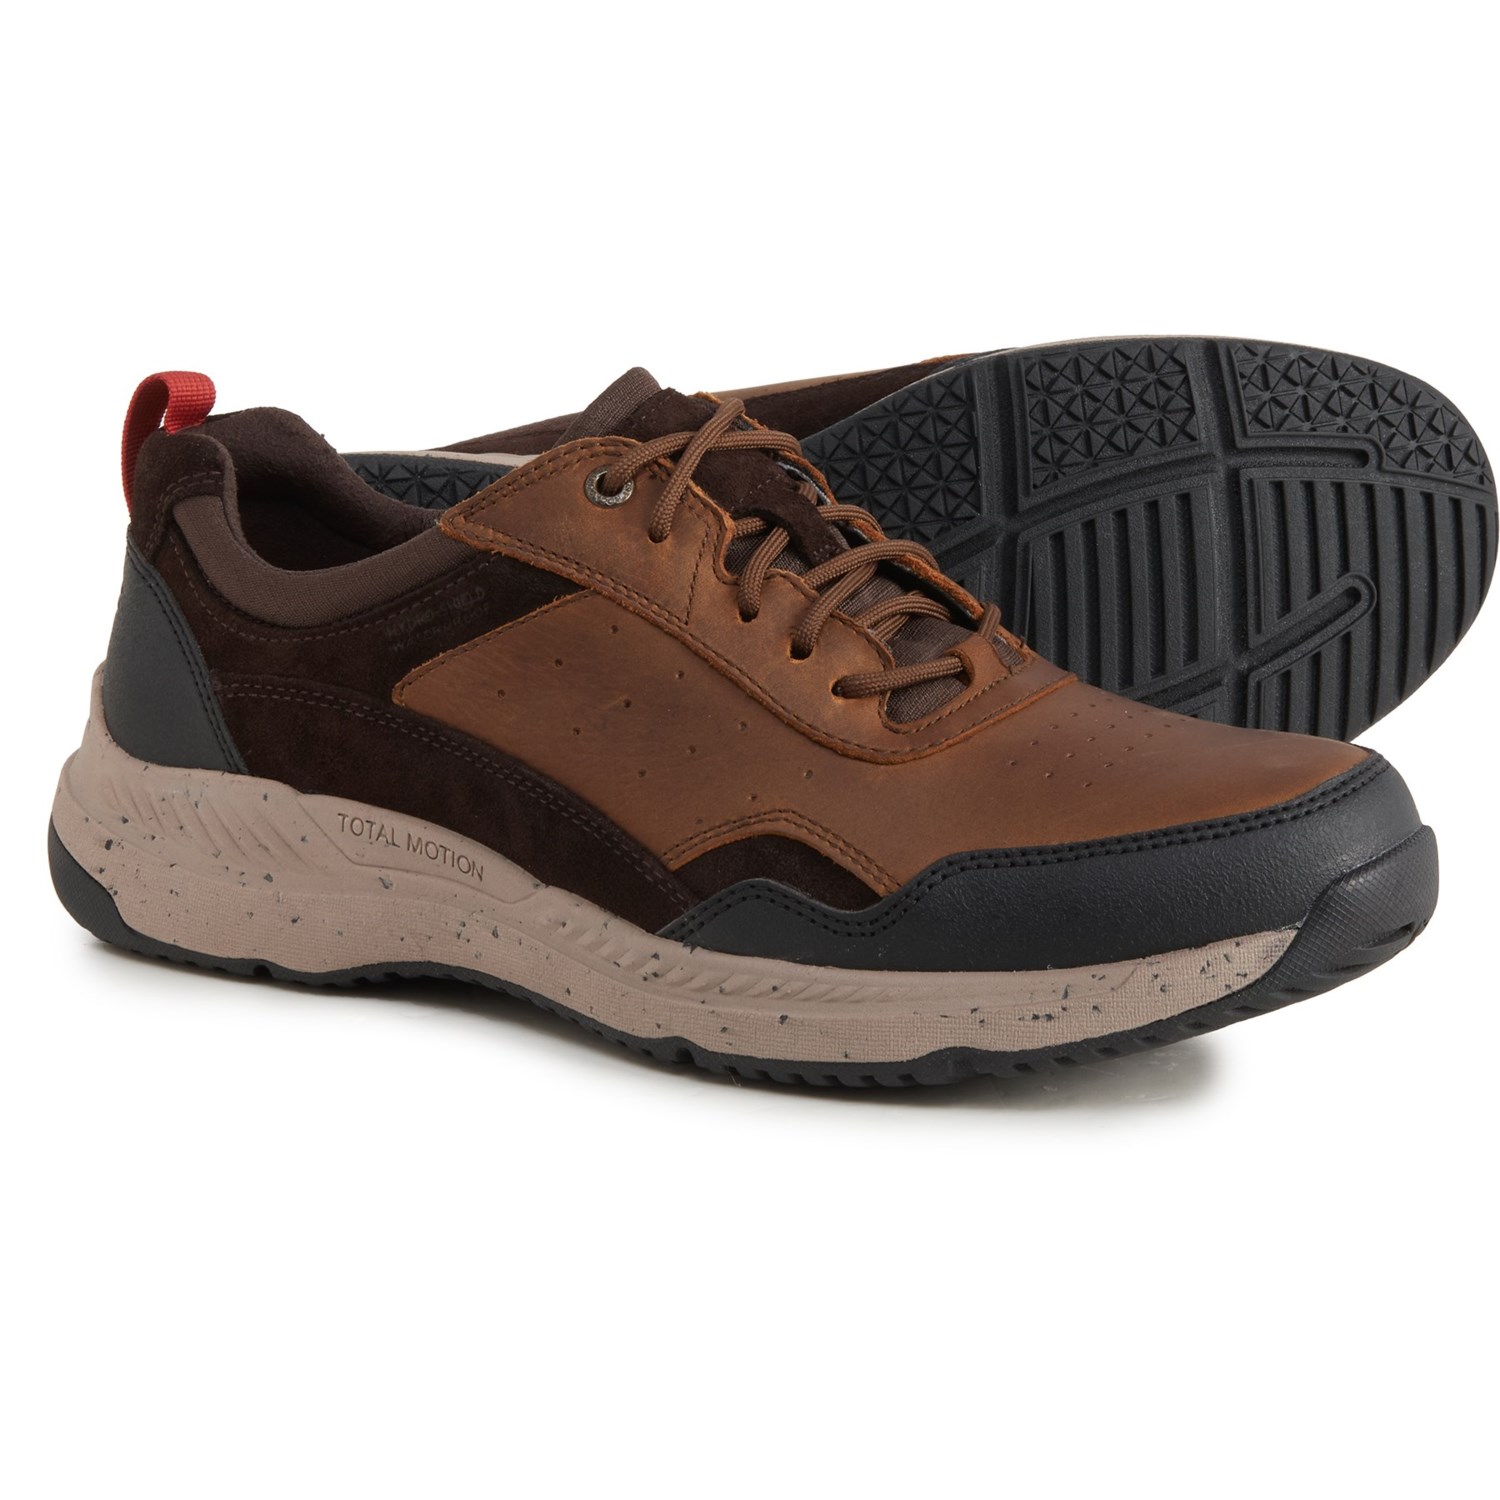 Rockport Total Motion Trail Ubal Shoes (For Men) - Save 58%